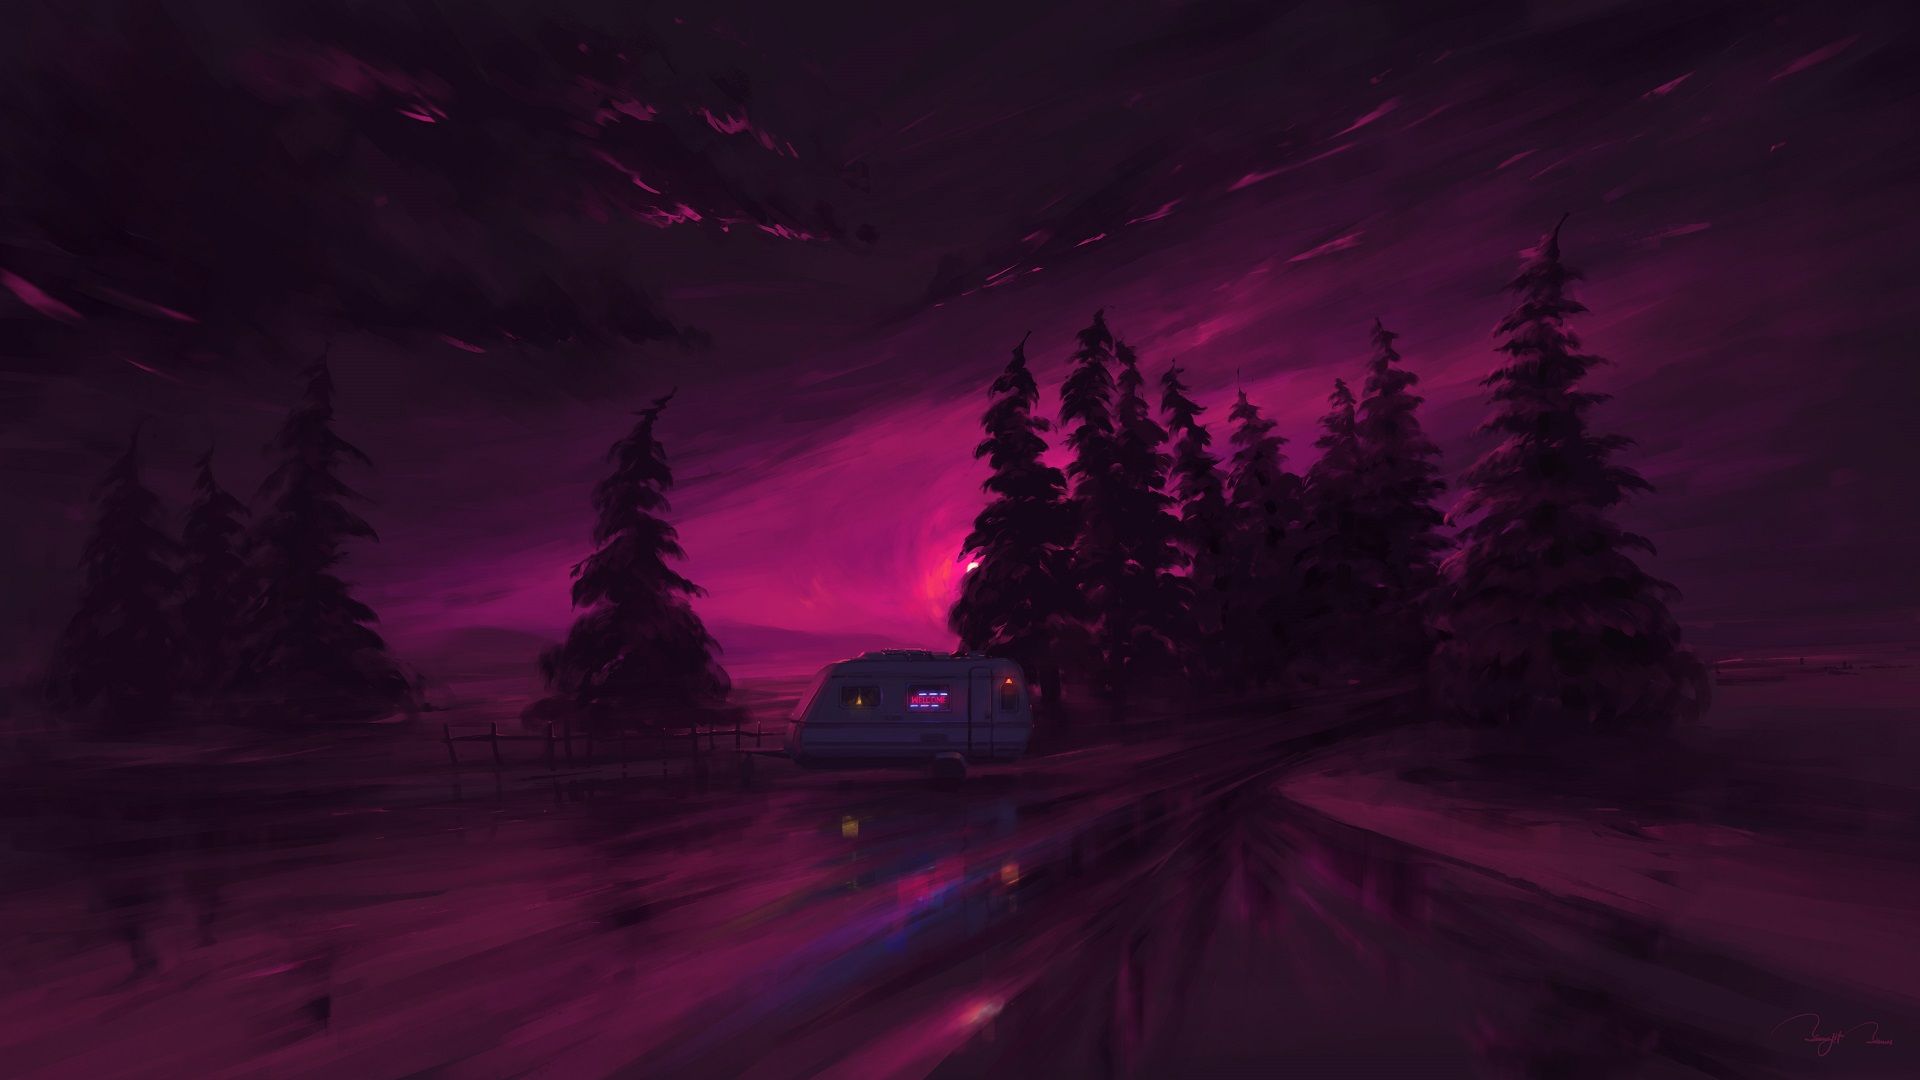 artistic, night, purple, sky, van